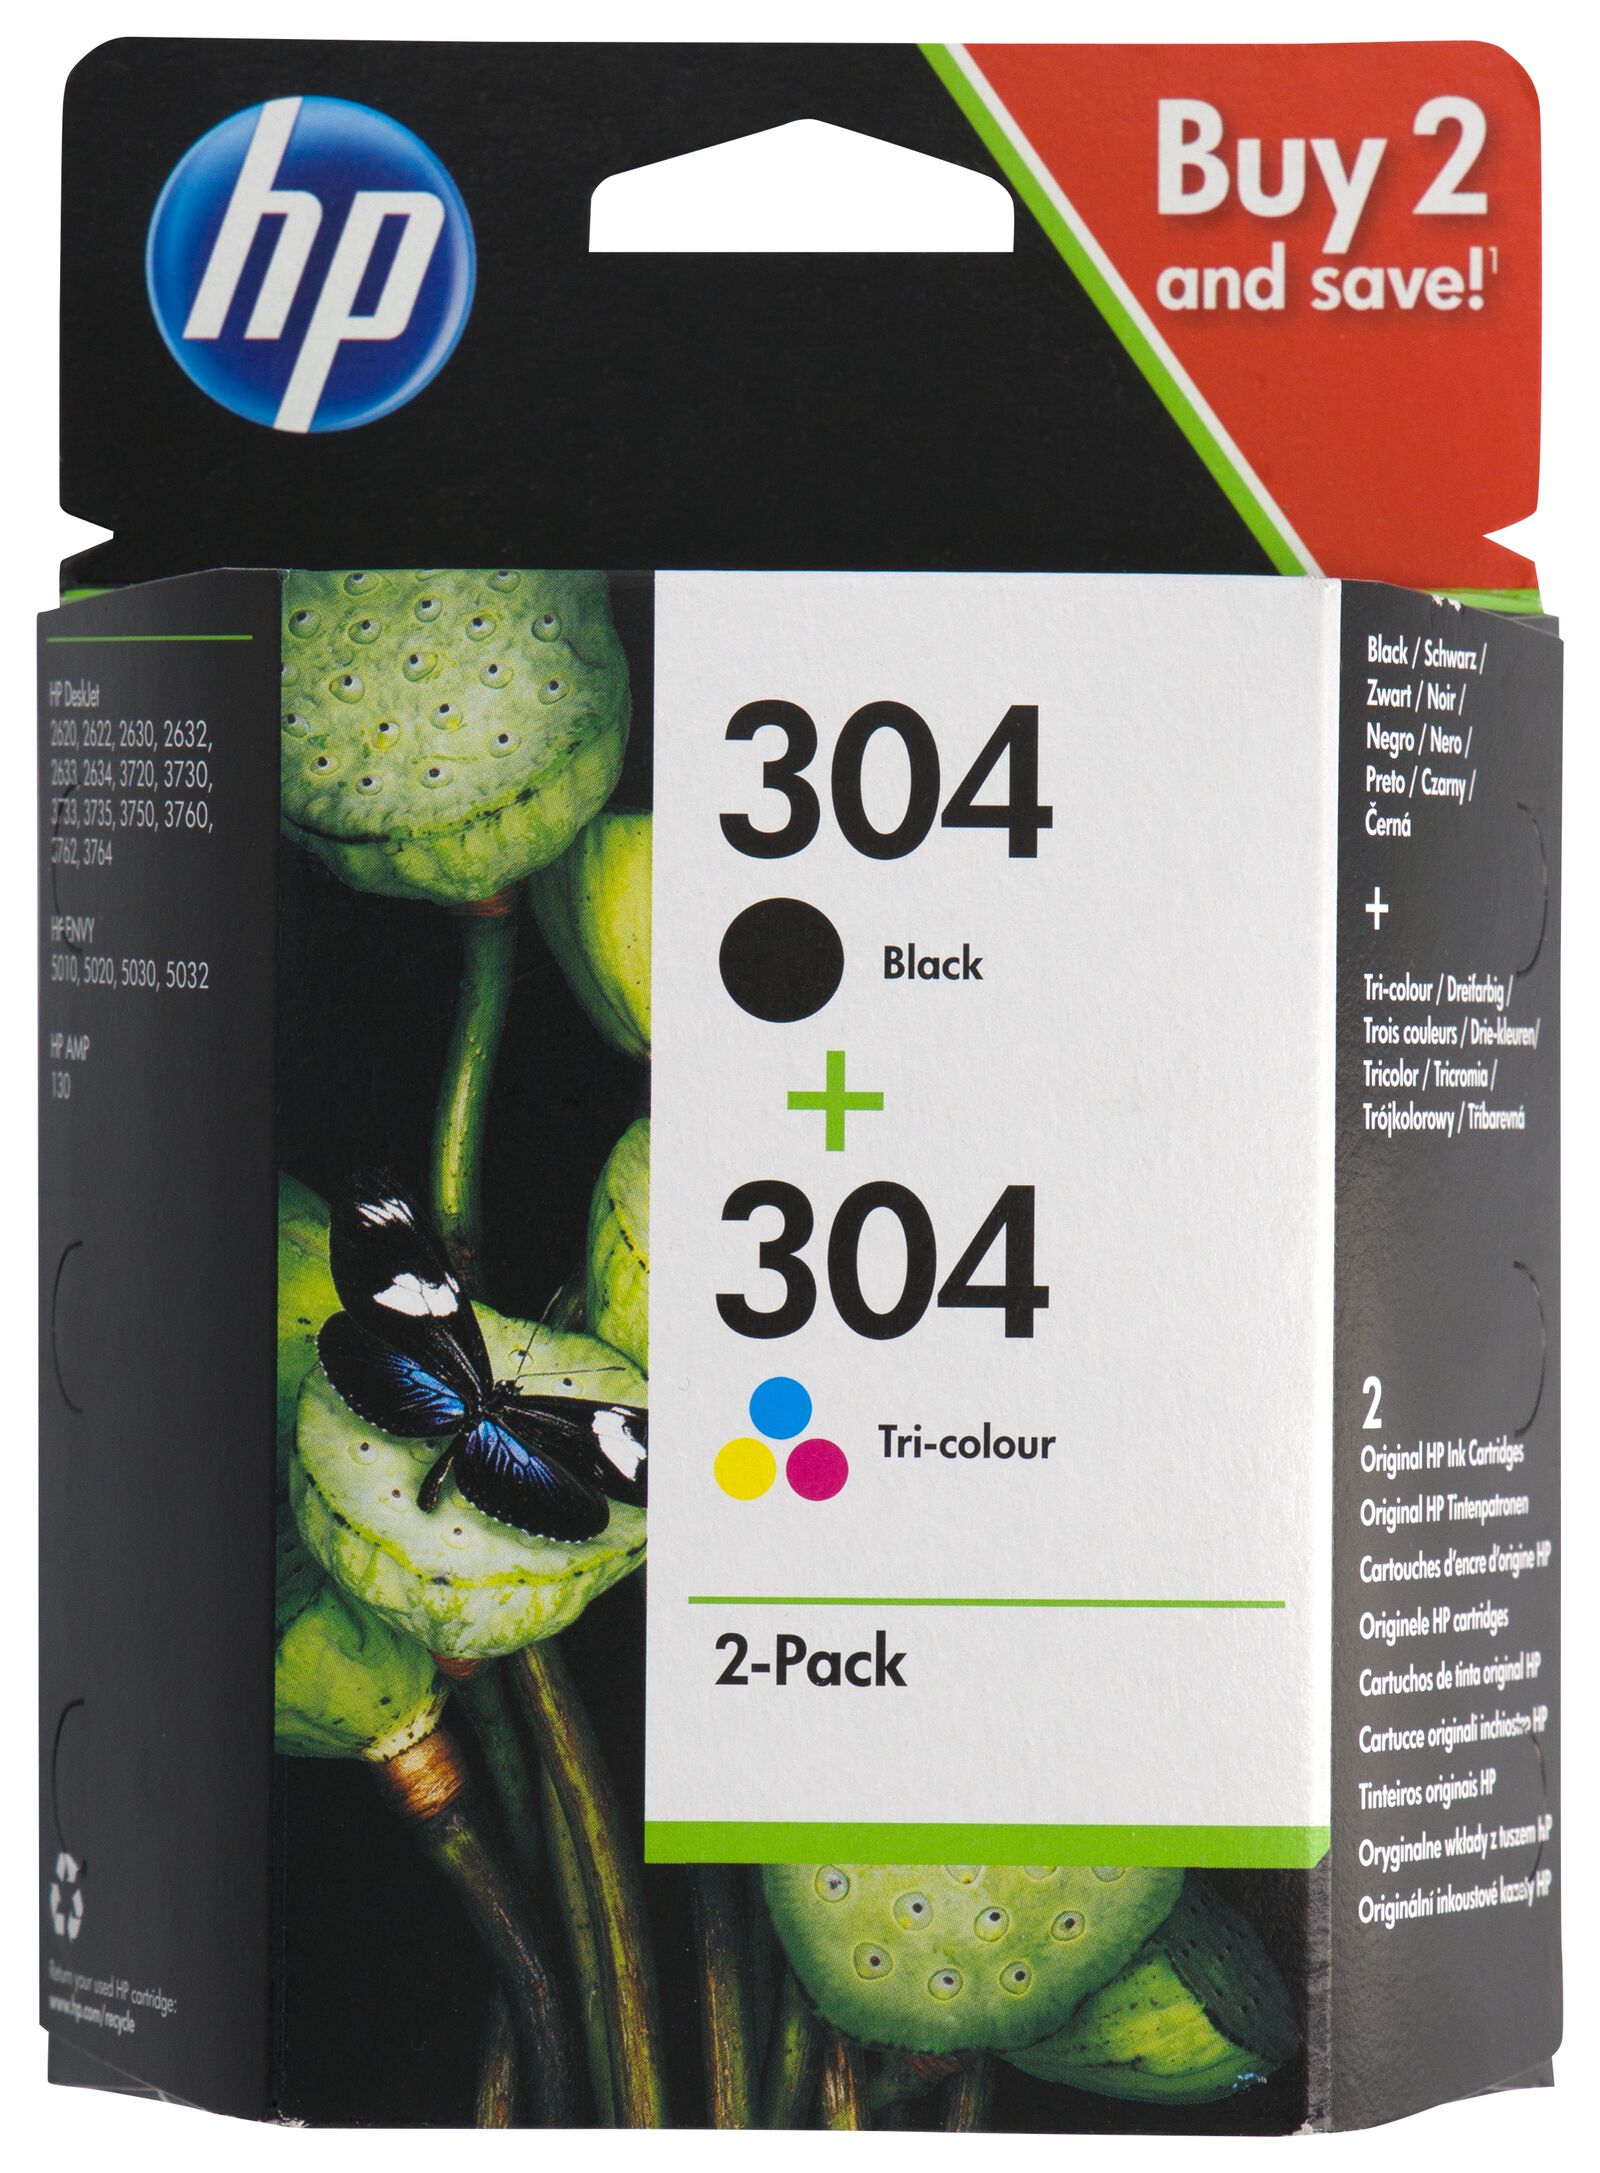 2 cartouches HP 304 noir/couleur - HEMA